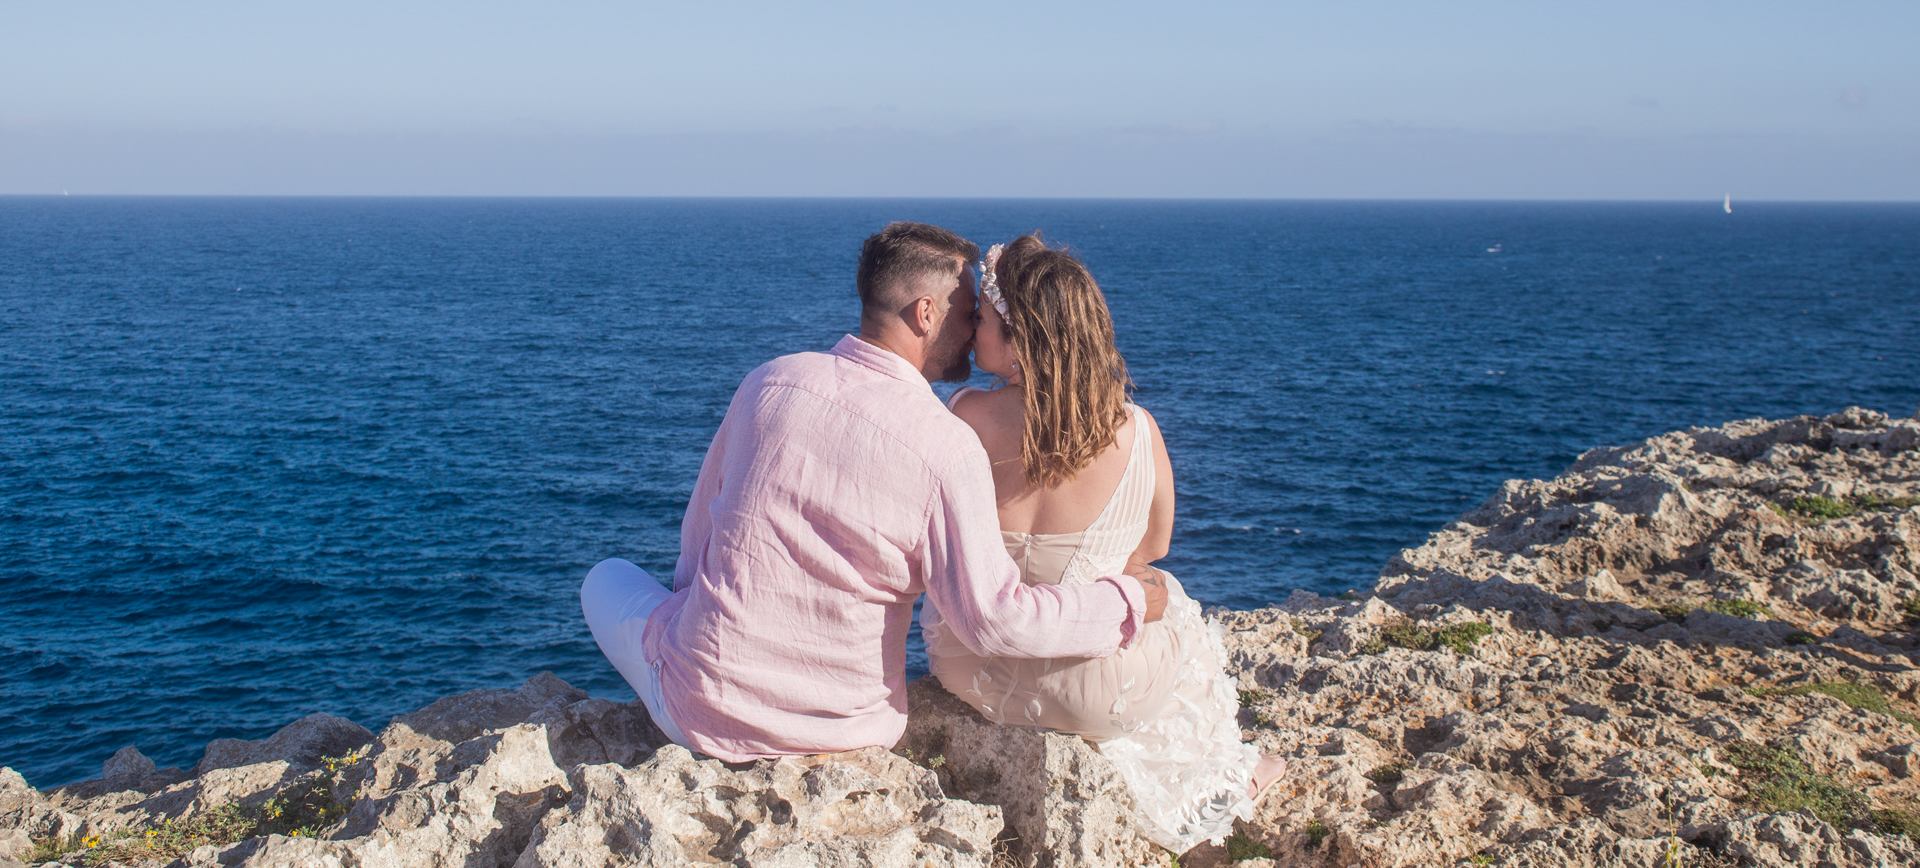 Elopement in Portocolom Mallorca - Bride & Groom at their beach wedding